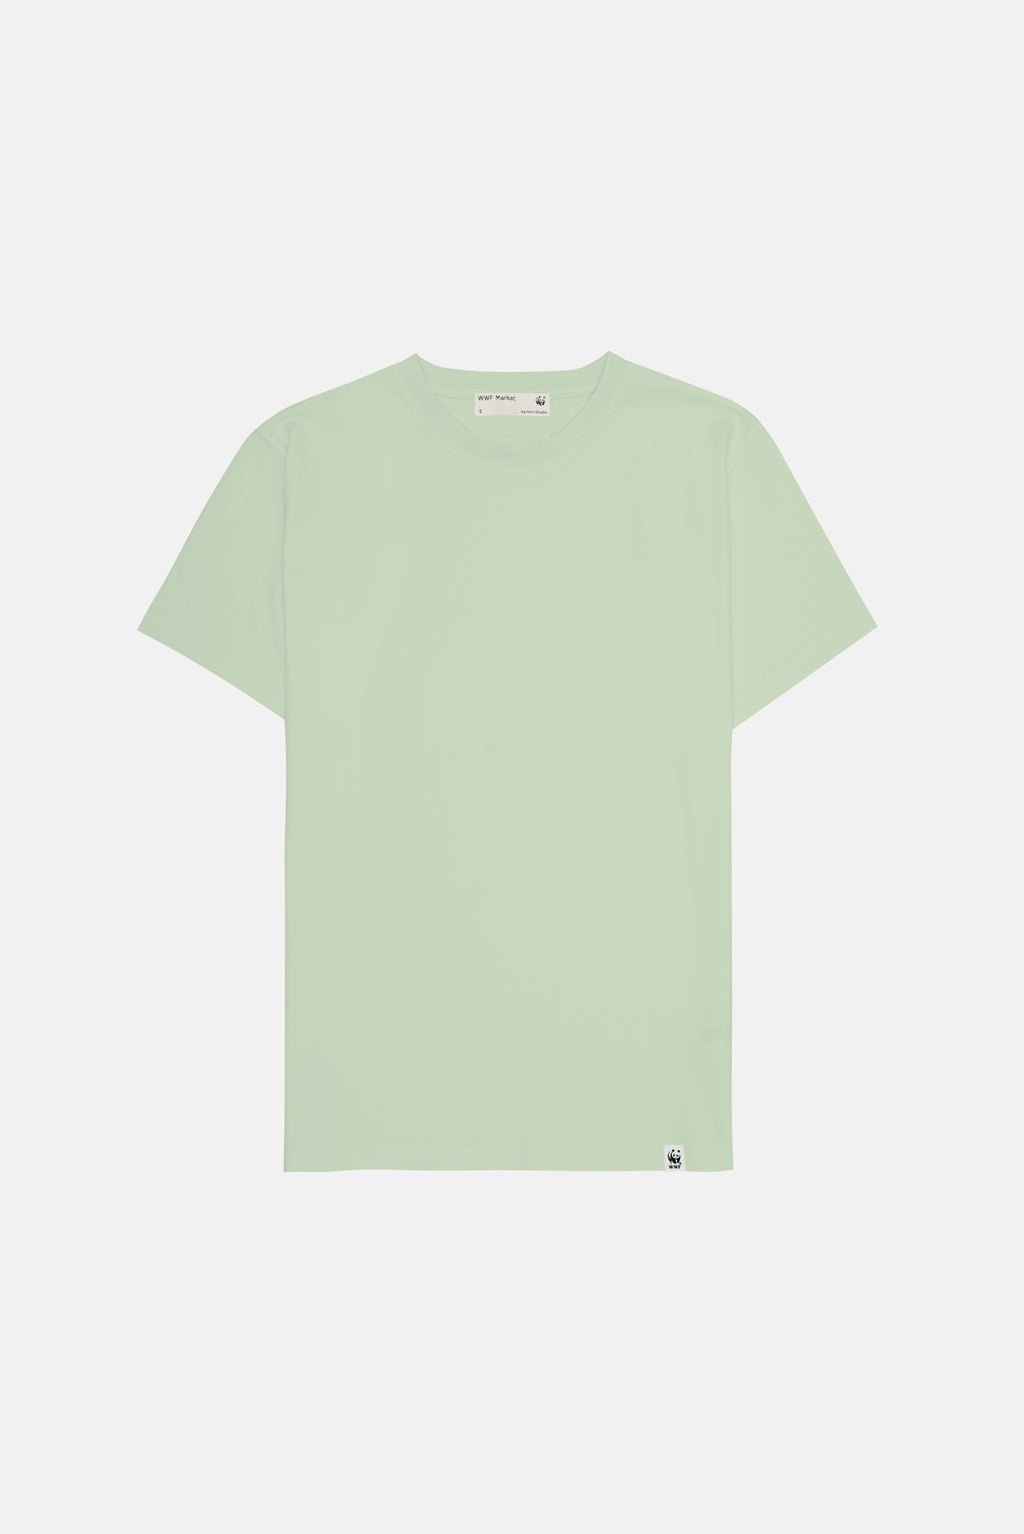 Basic Kadın Light-Weight T-shirt - Mint Yeşili